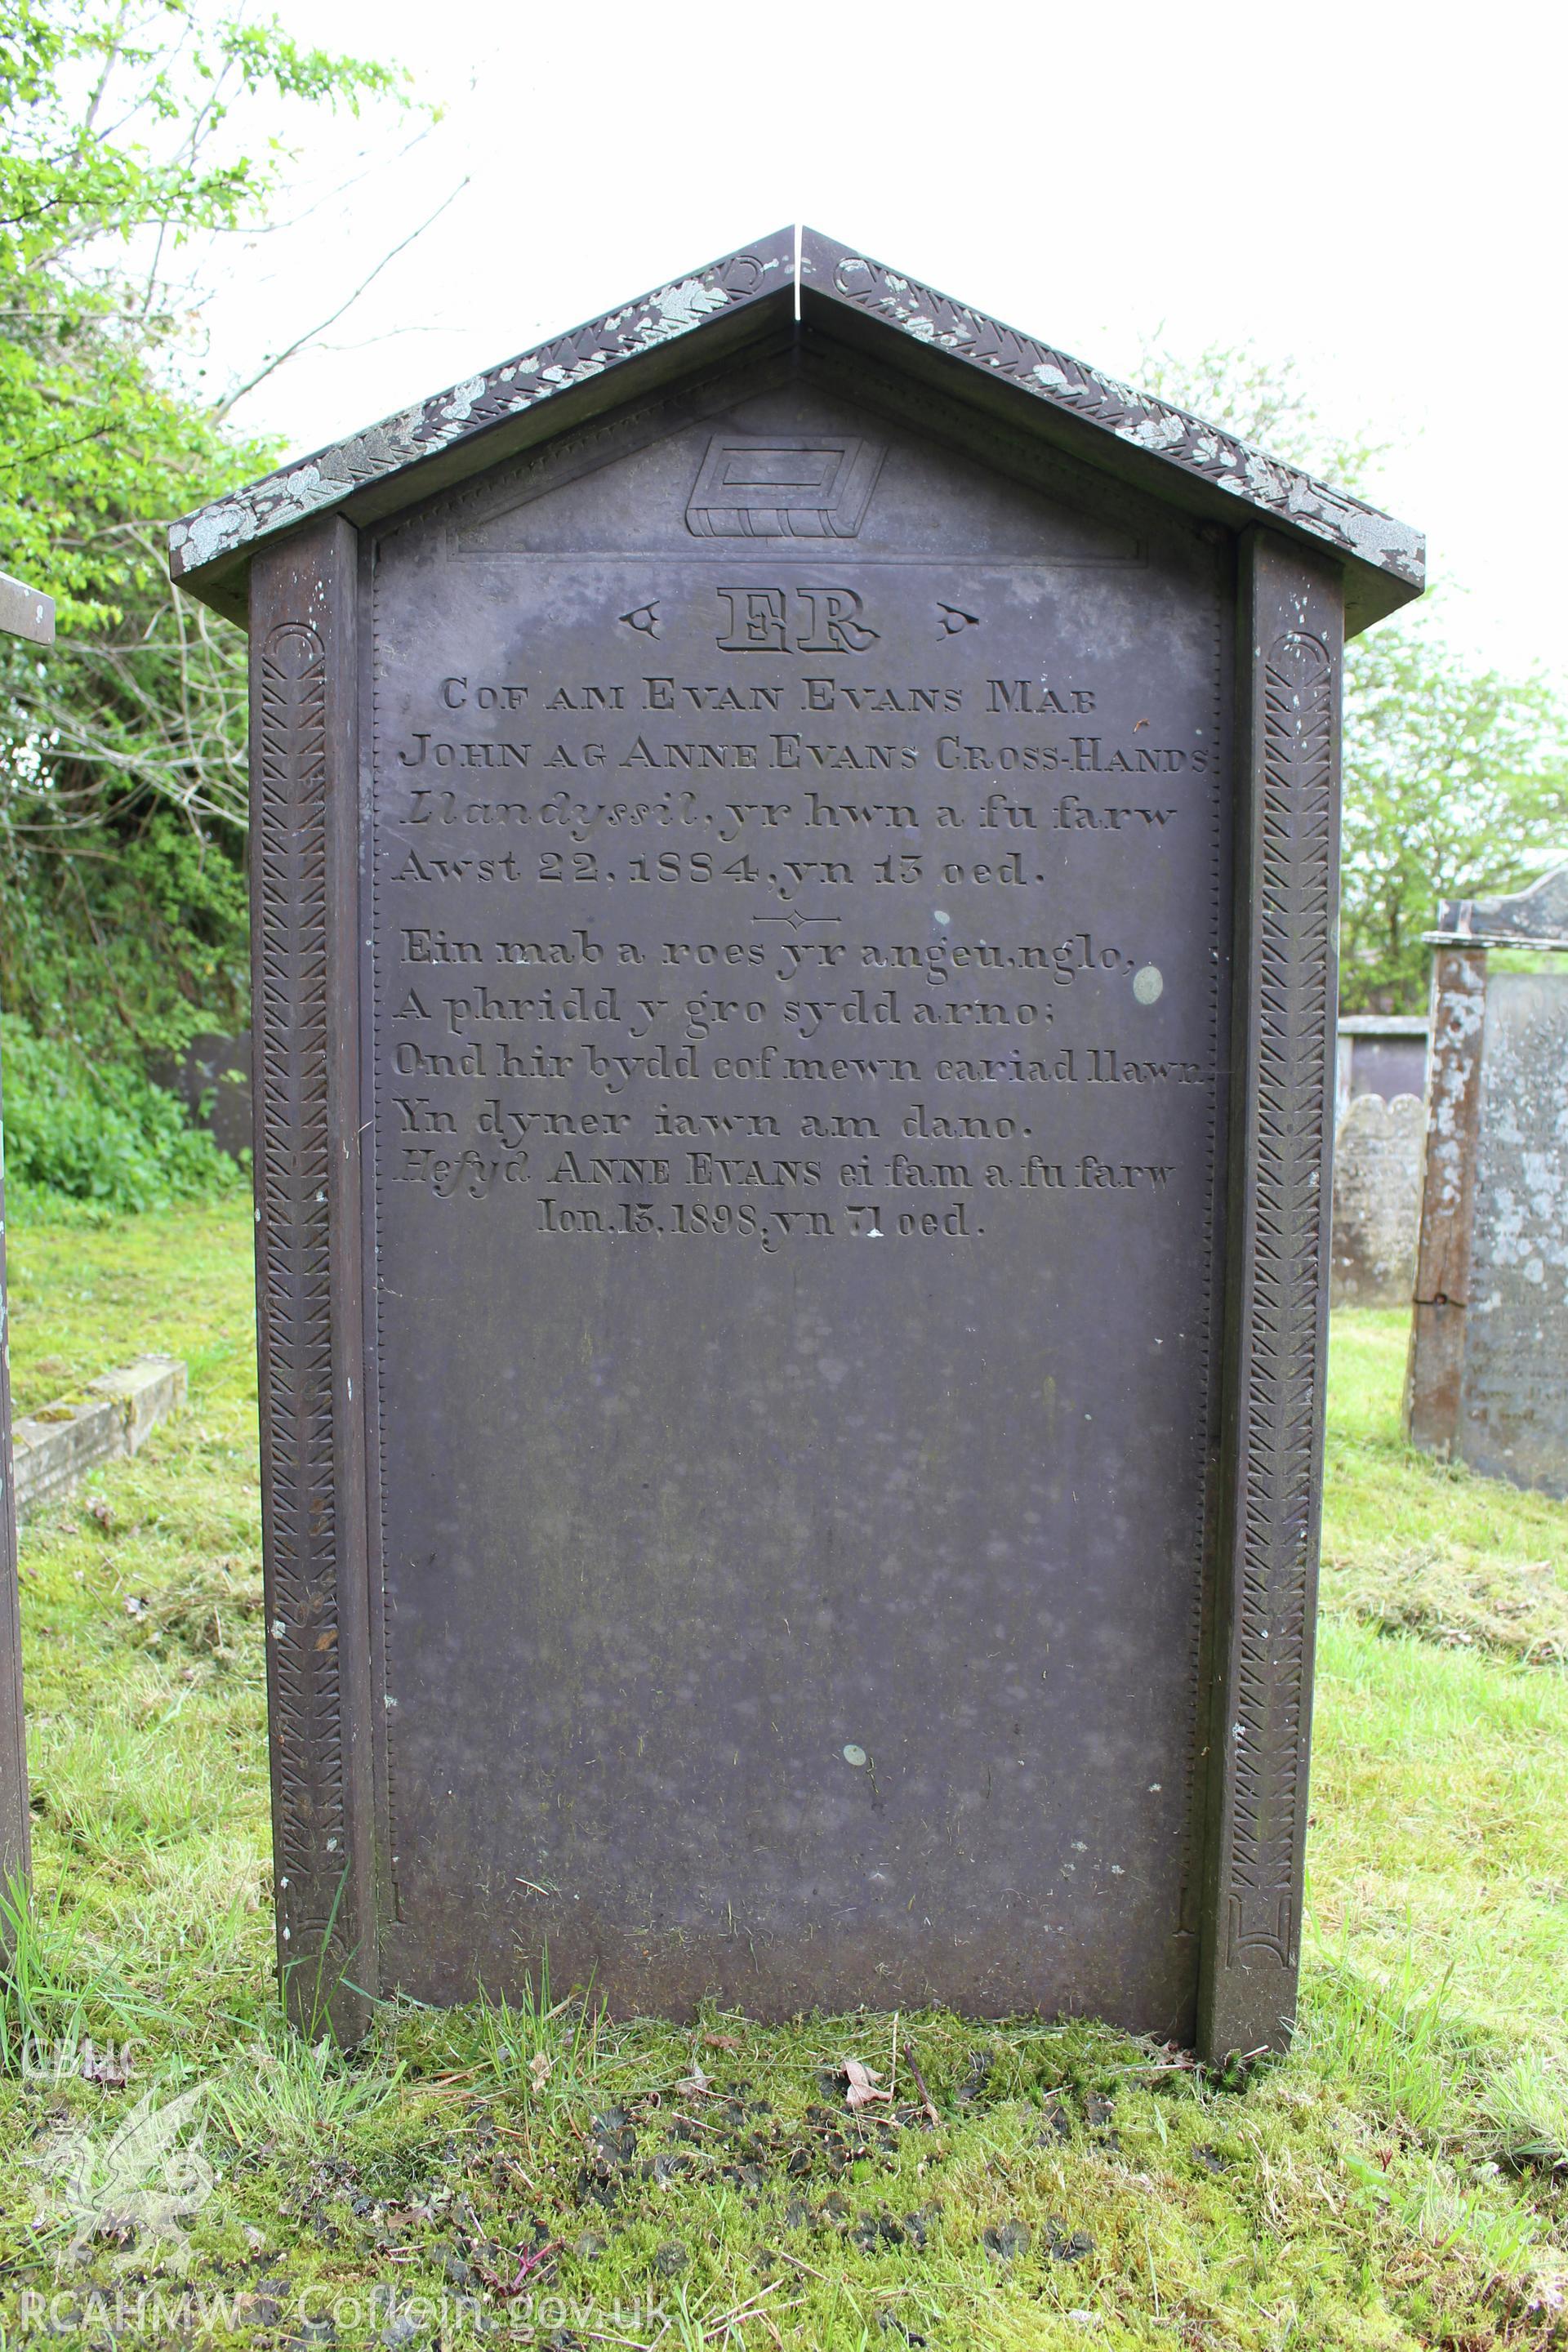 Gravestone of Evan & Anne Evans